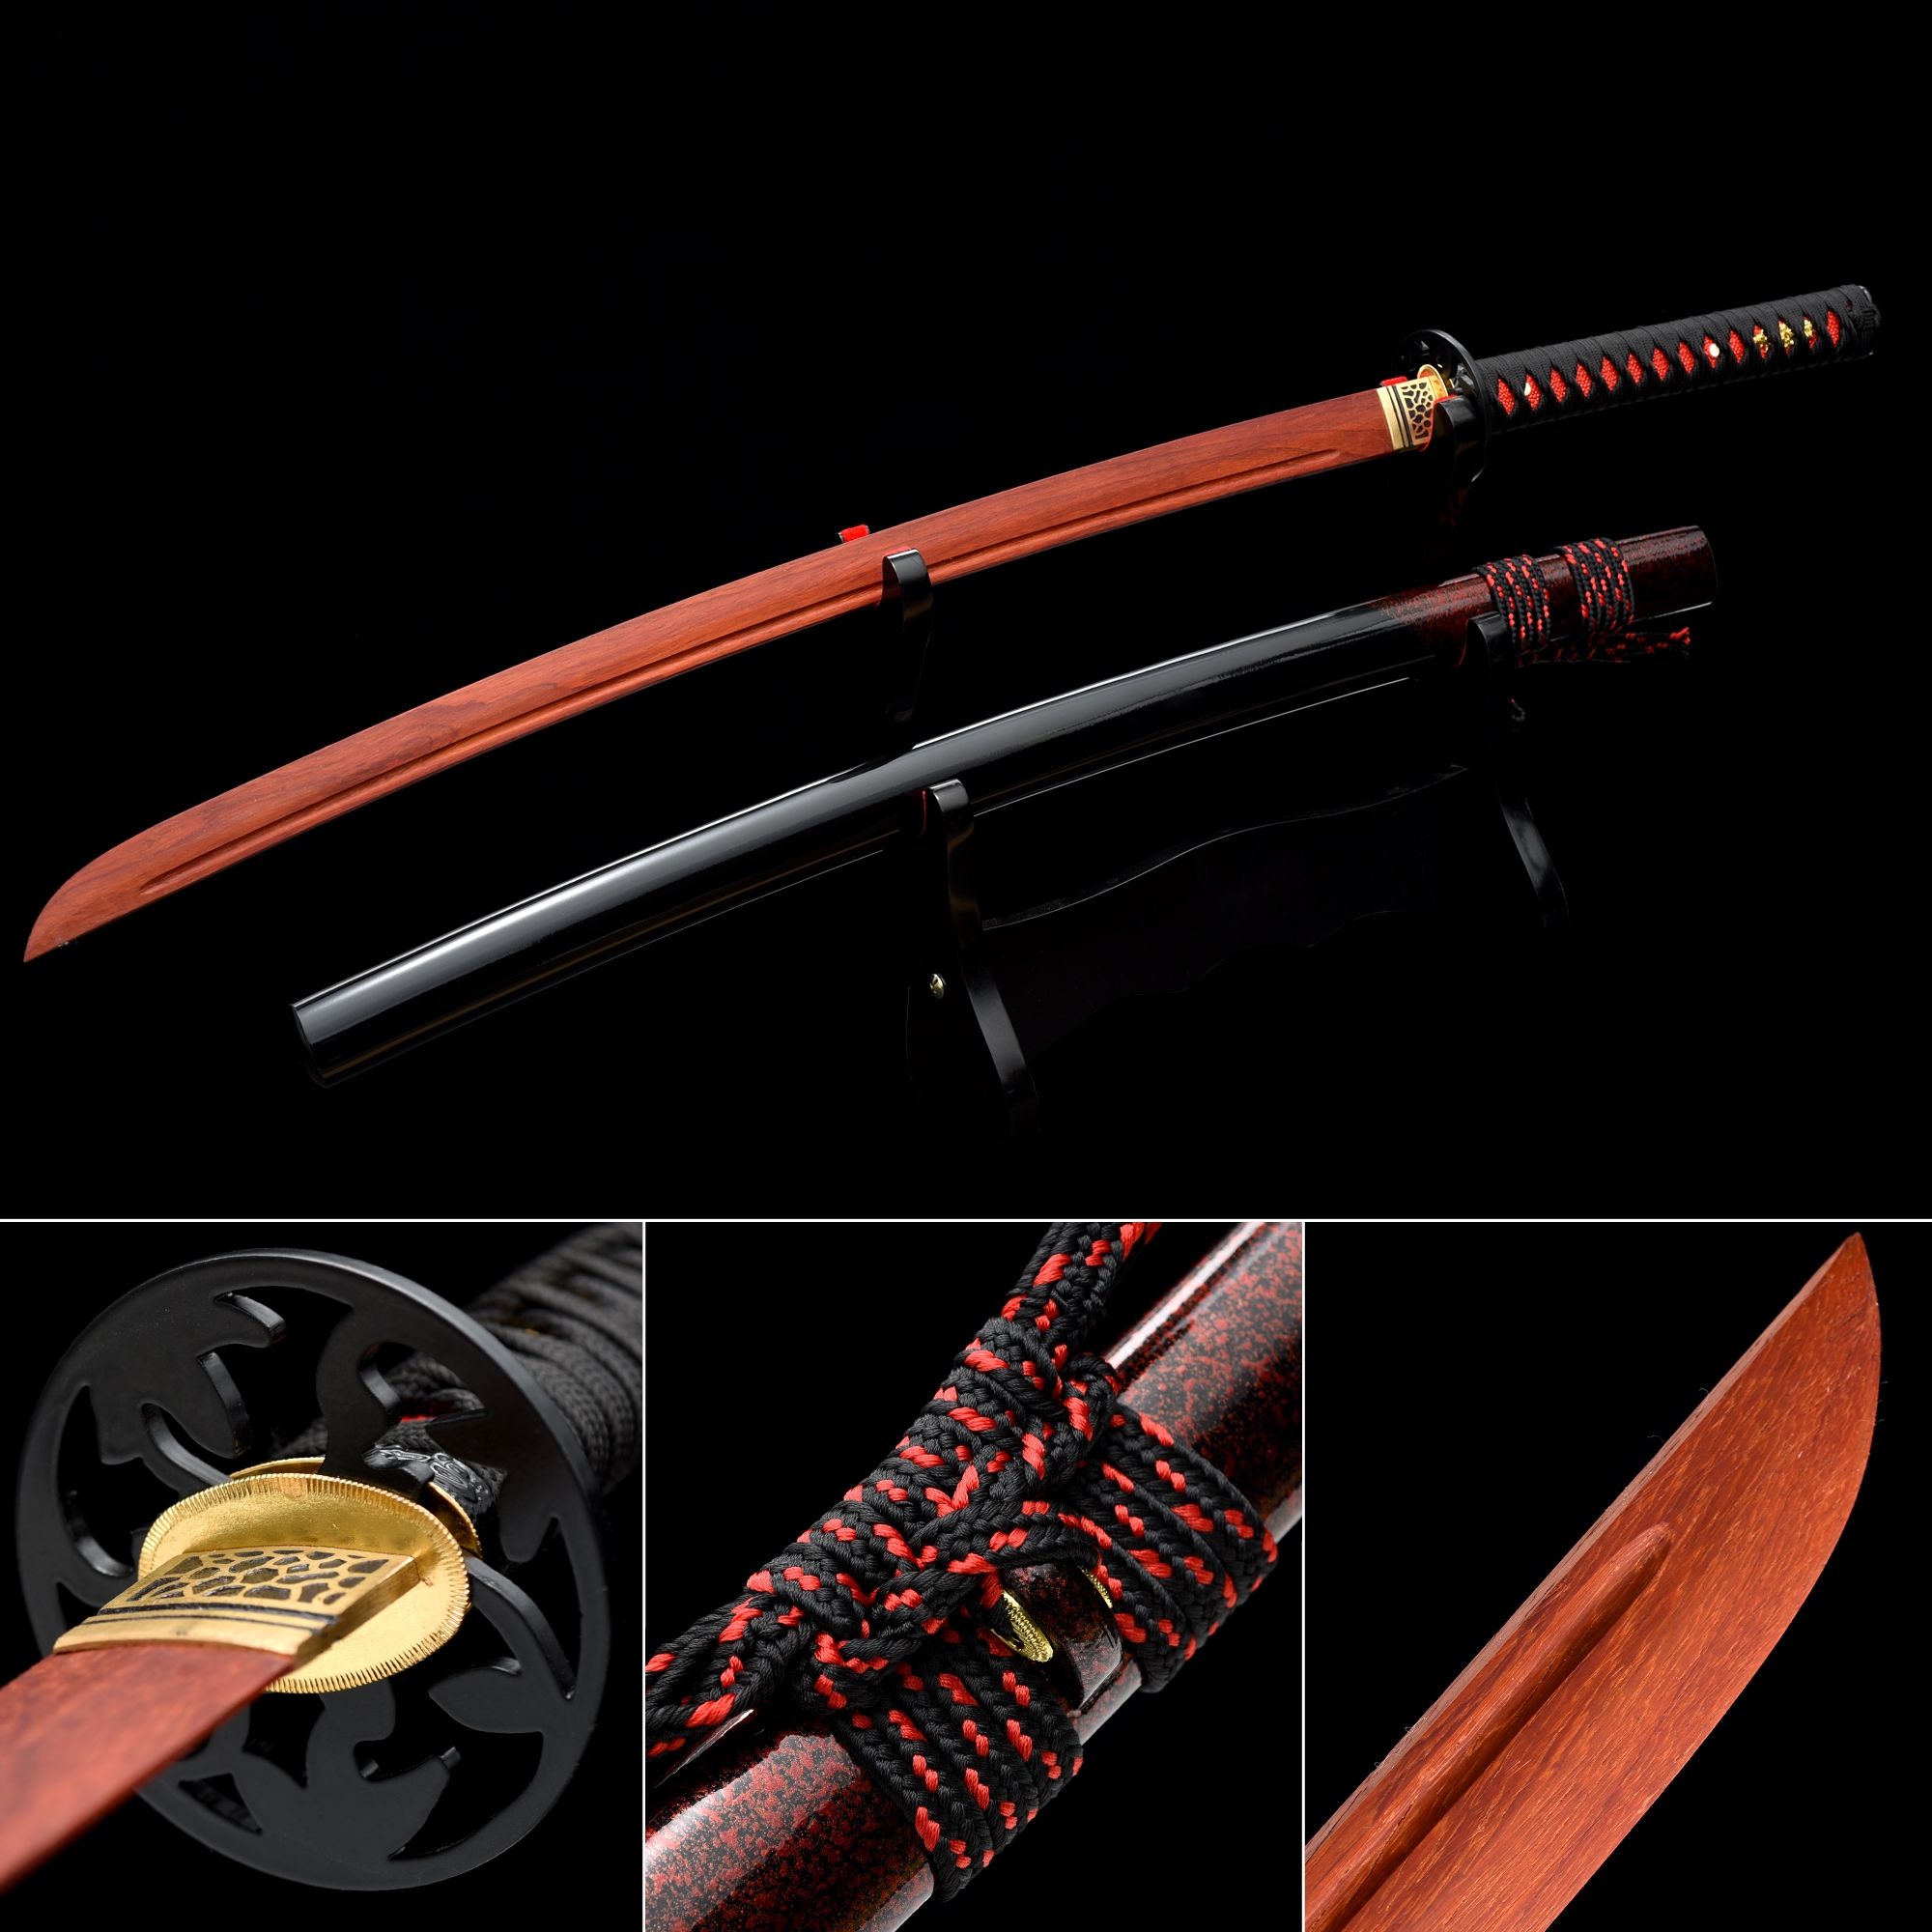 Handmade Rosewood Wooden Blunt Unsharpened Blade Katana Samurai Sword With Black Scabbard